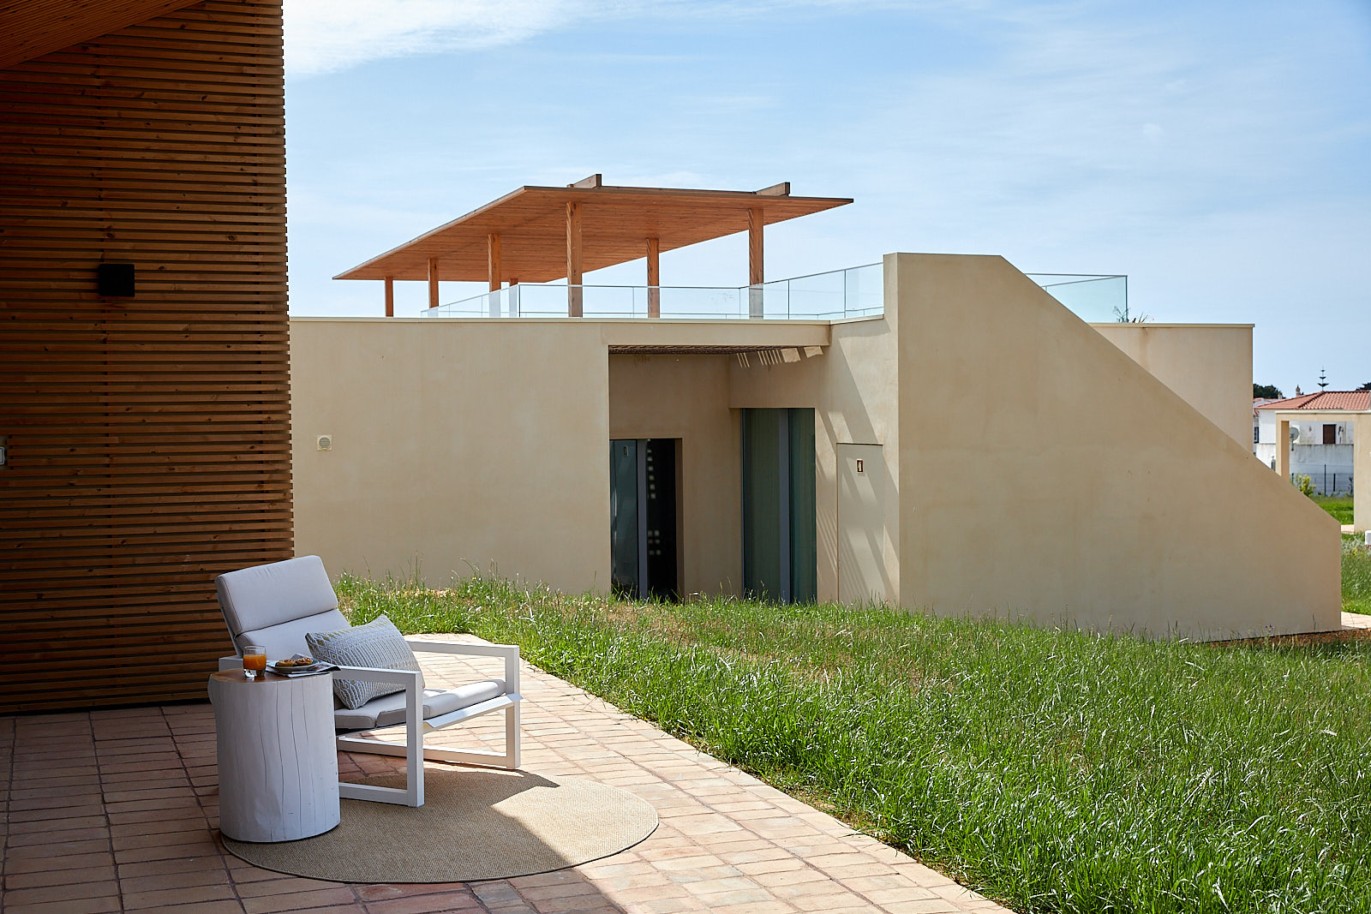 2 bedroom apartment in resort, for sale in Porches, Algarve_229255